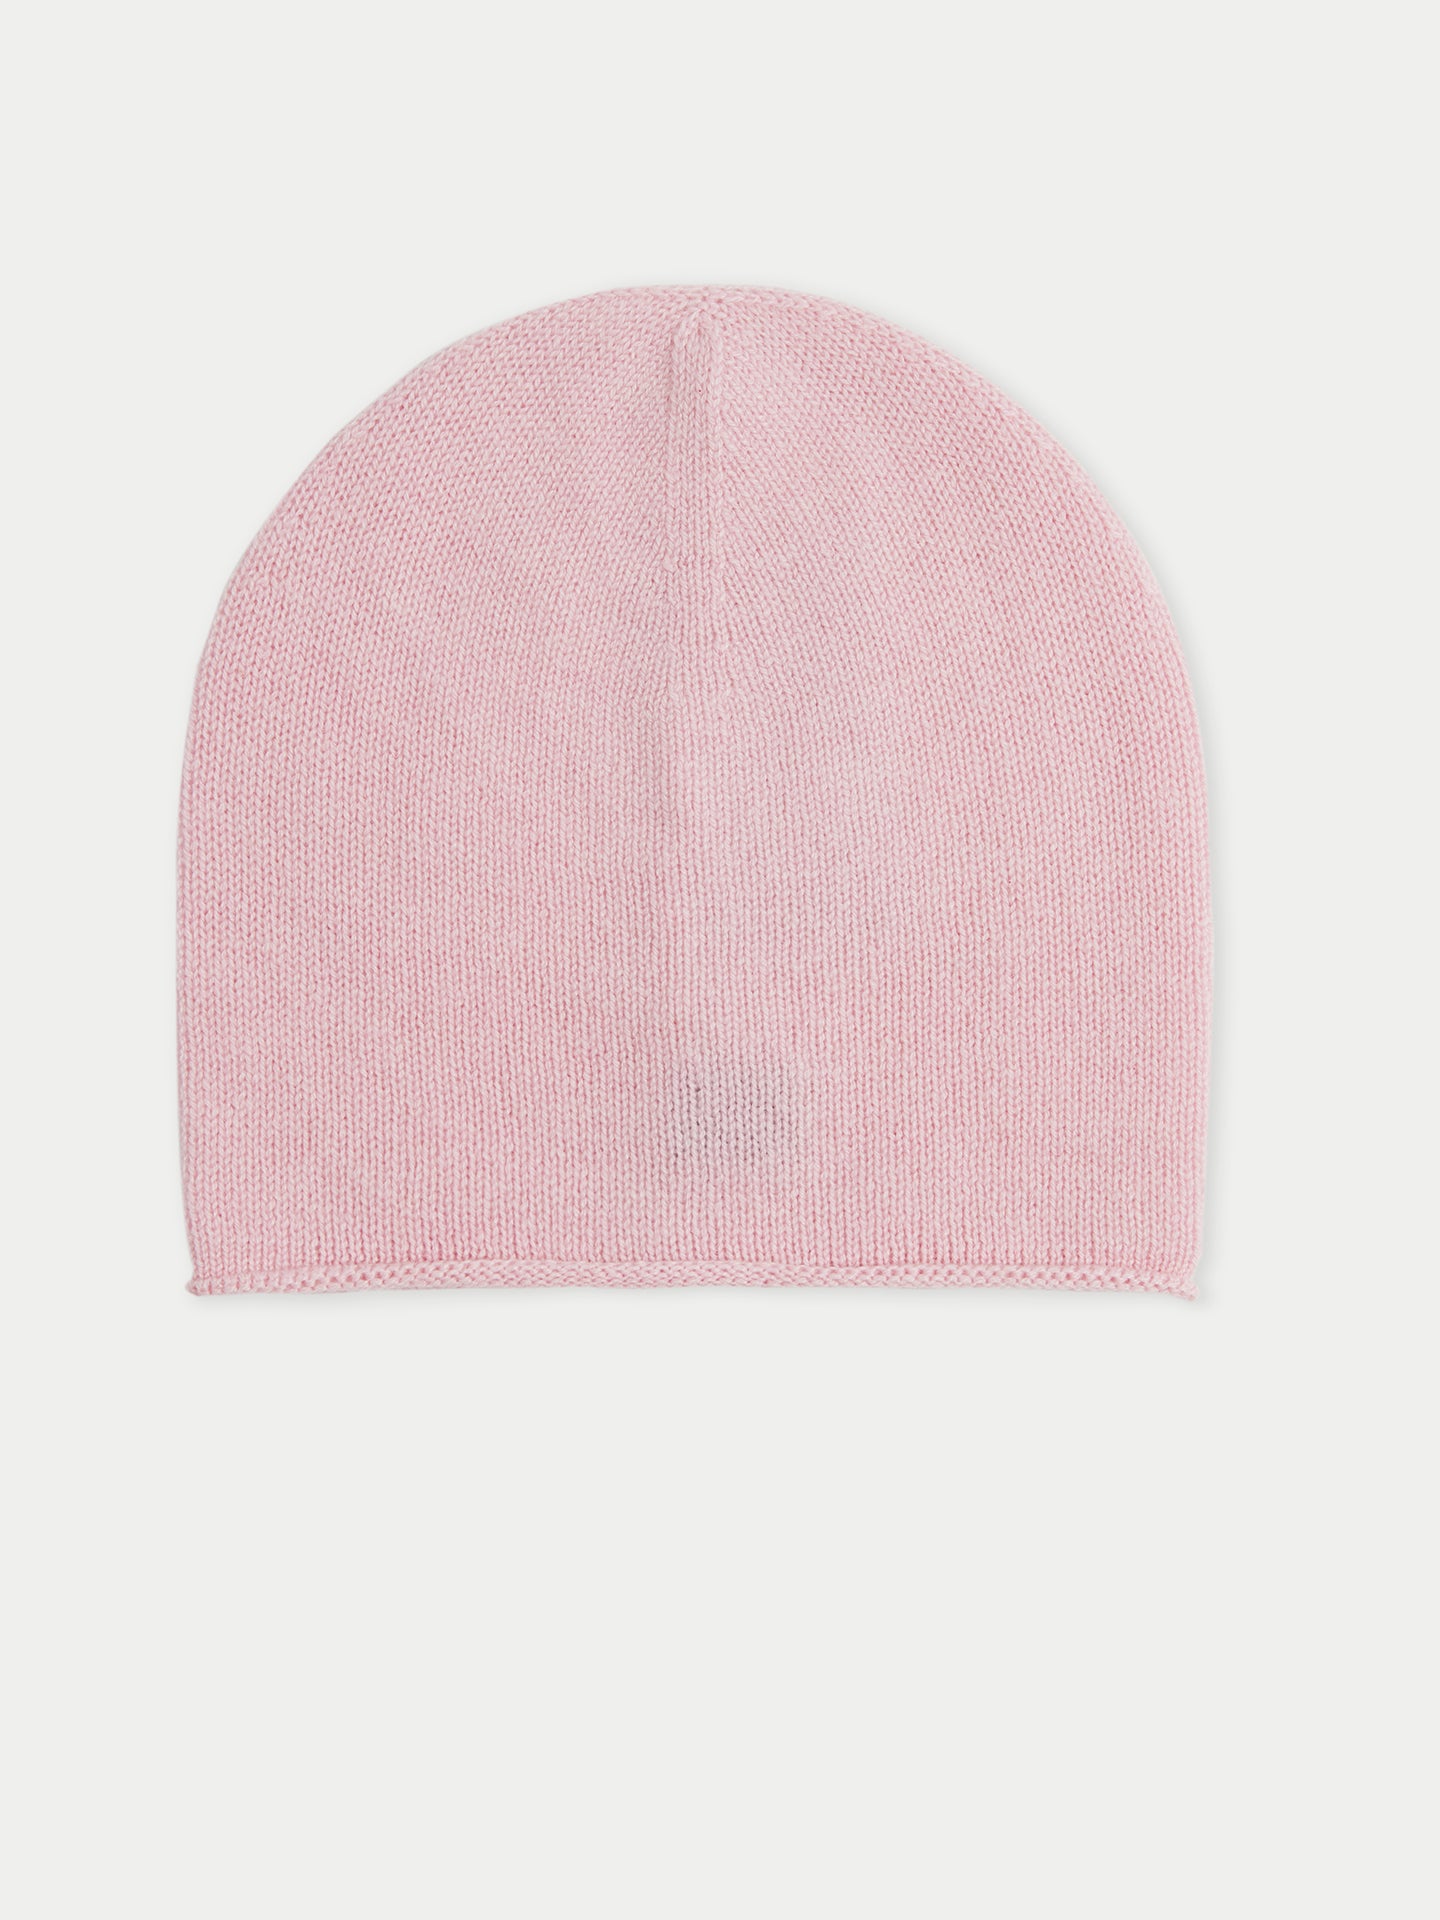 Women' Cashmere $99 Hat & Sweater Almond Blossom - Gobi Cashmere